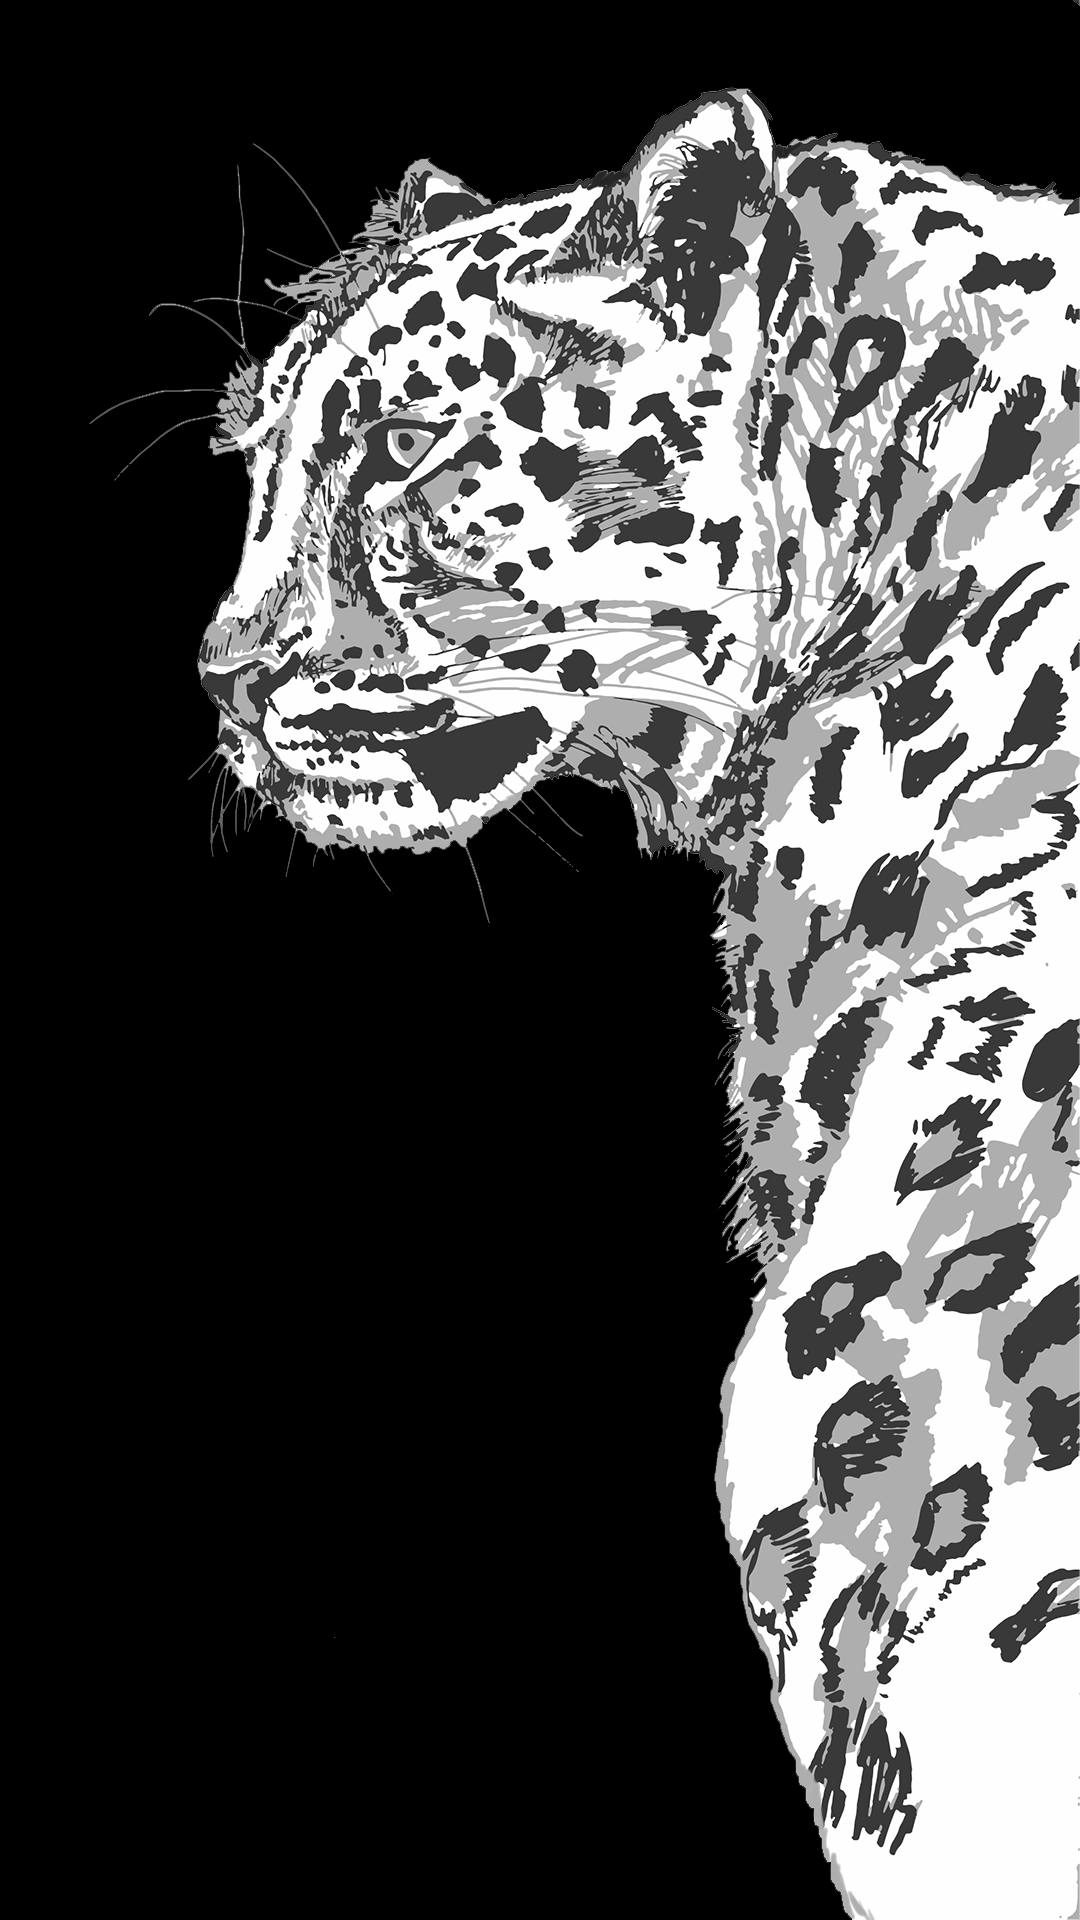 Leopard I drew, thought it'd make a nice wallpaper. (1920x1080)